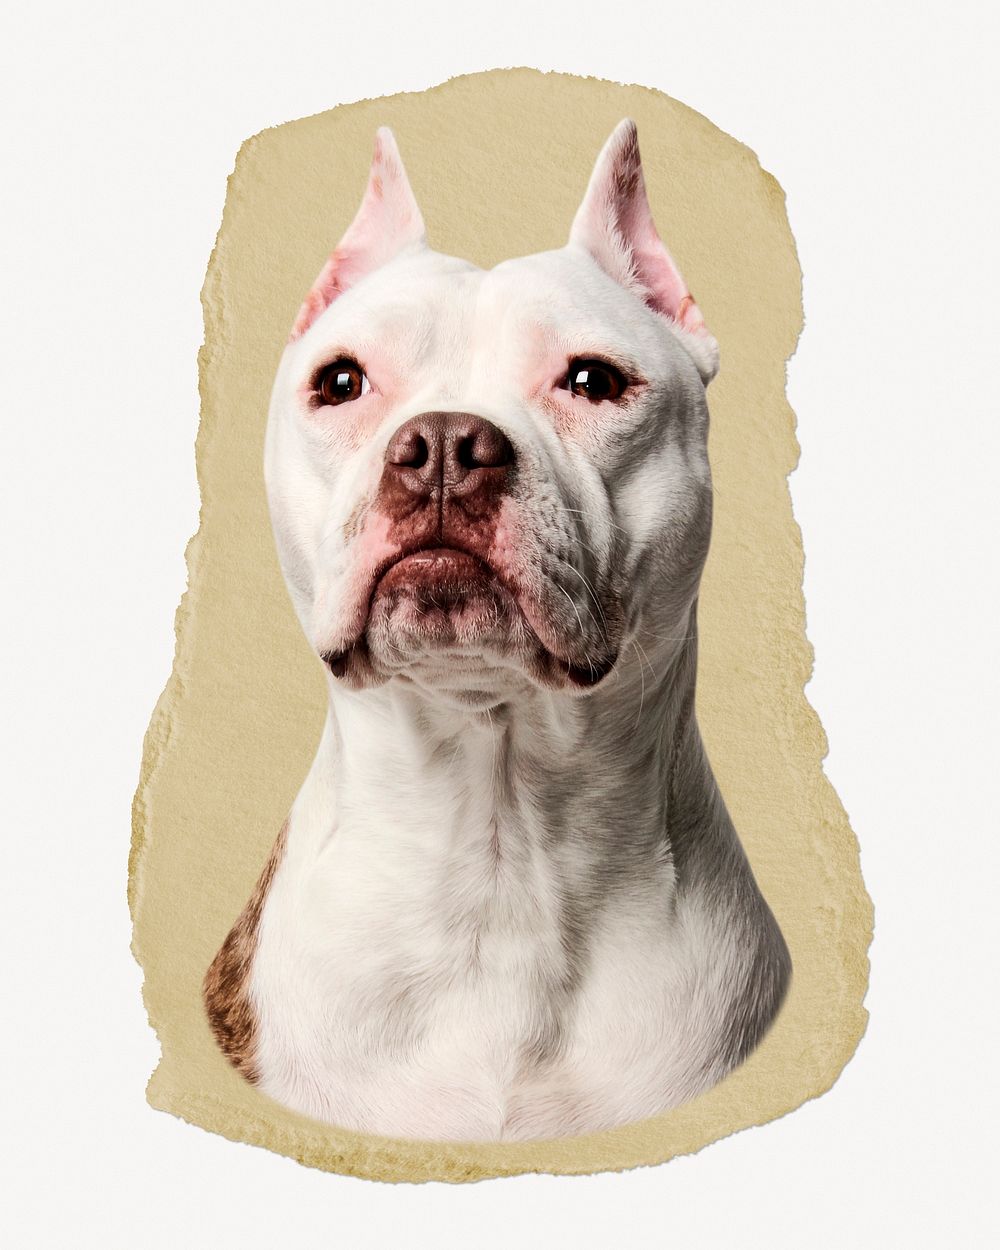 Bulldog portrait ripped paper, pet animal graphic